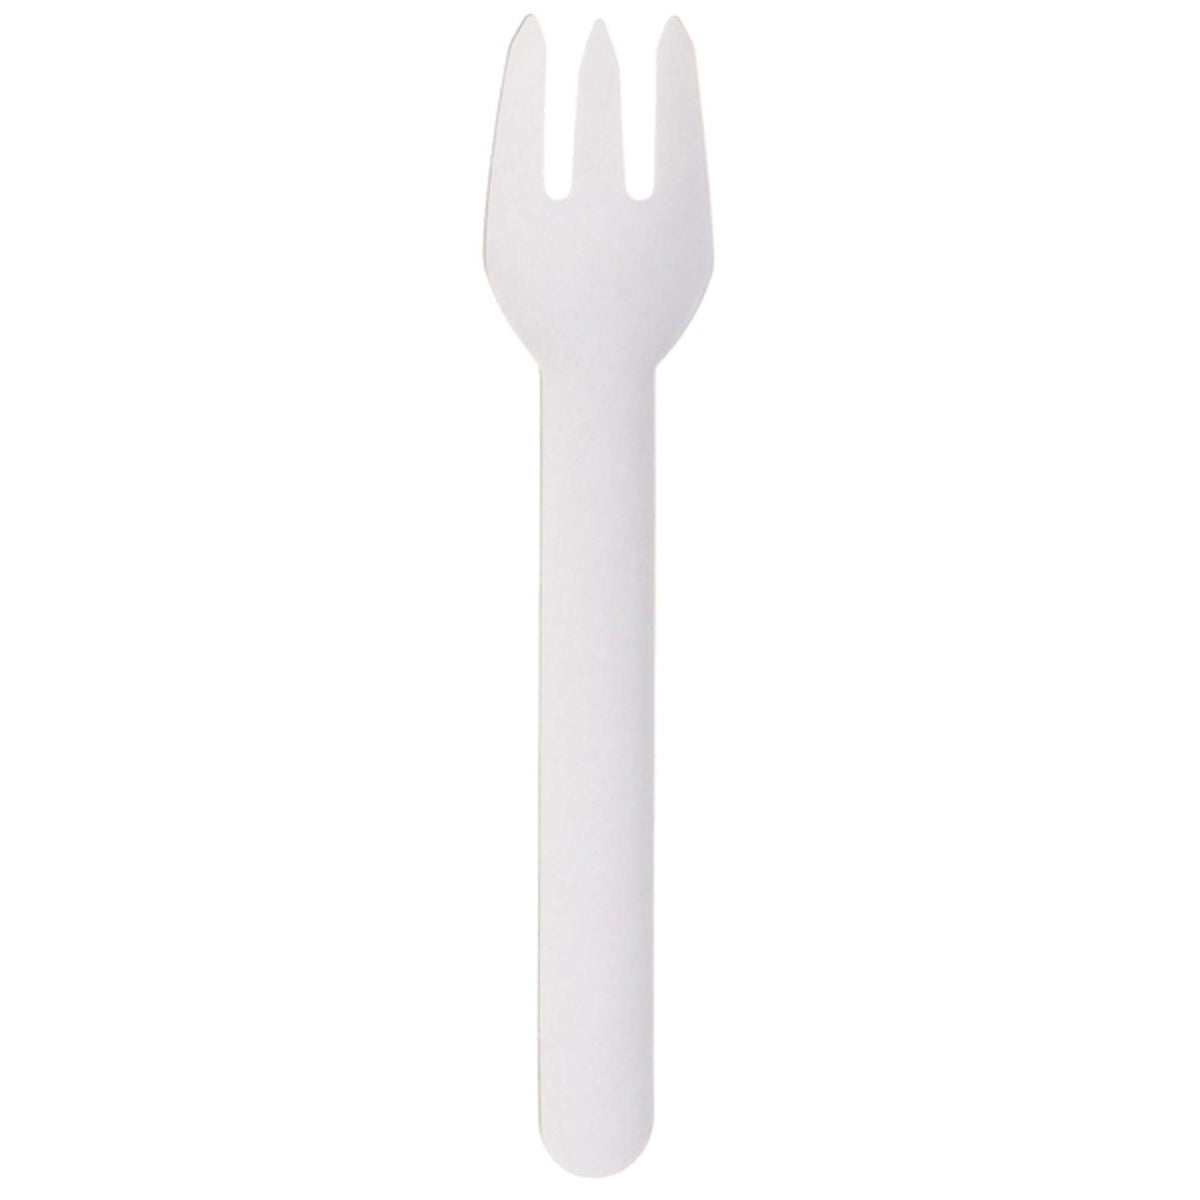 SANTEX Disposable-Plasticware White ECO Paper Forks, 10 Count 3660380097723